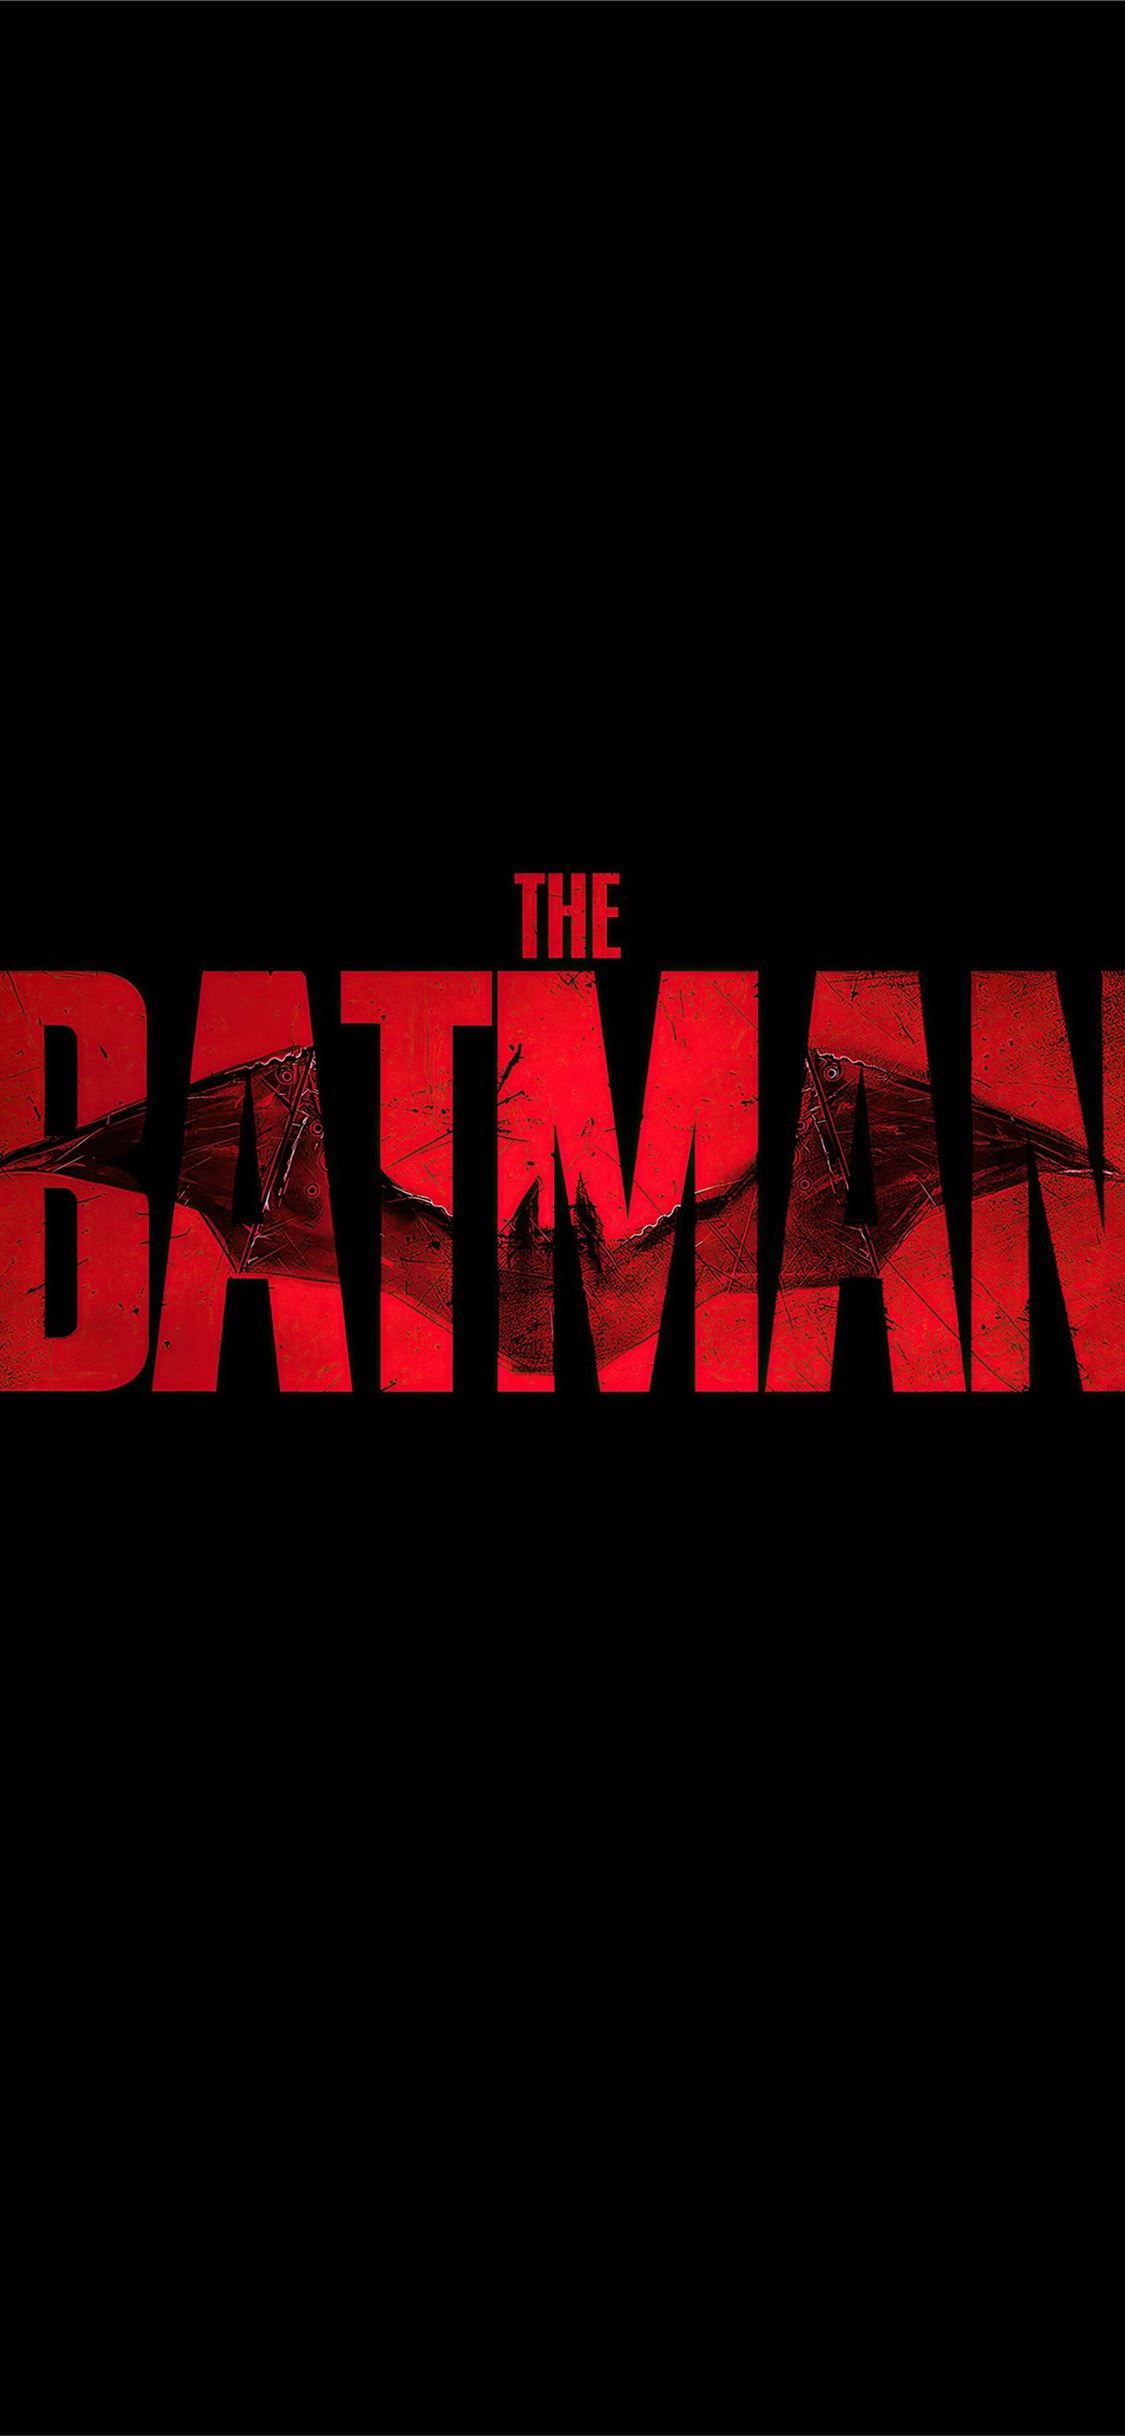 the batman logo 2021 8k iPhone X Wallpaper Free Download